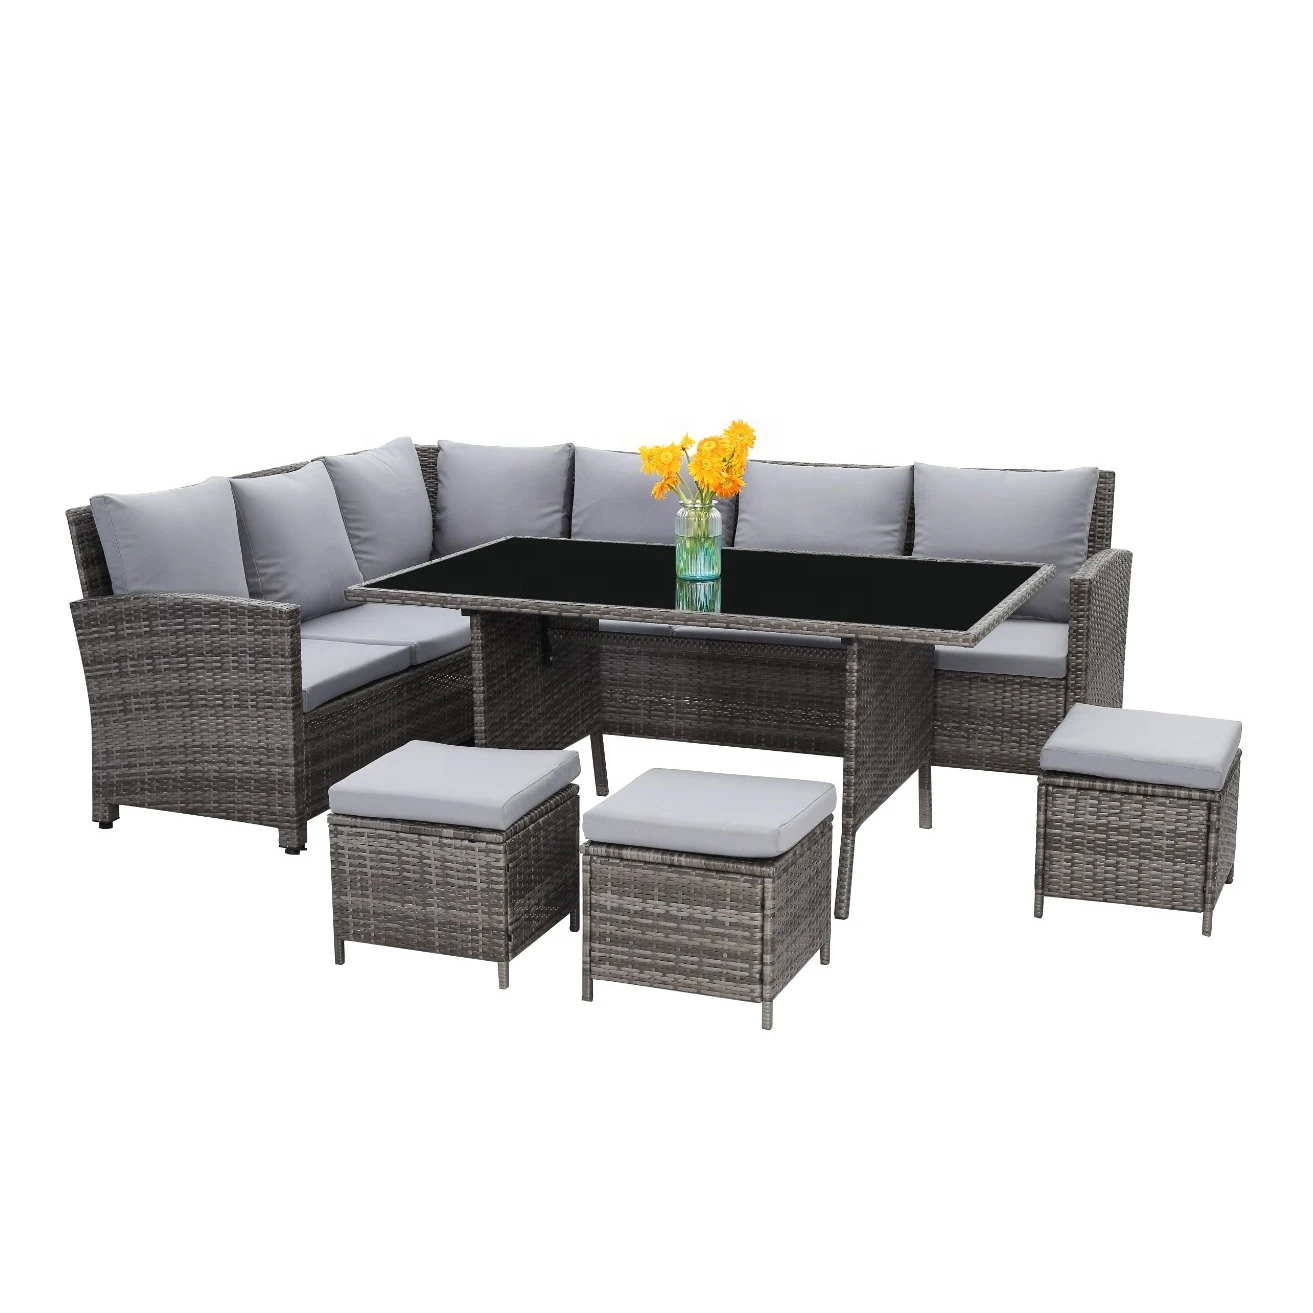 2020 outdoor rattan  patio furniture  sofa set